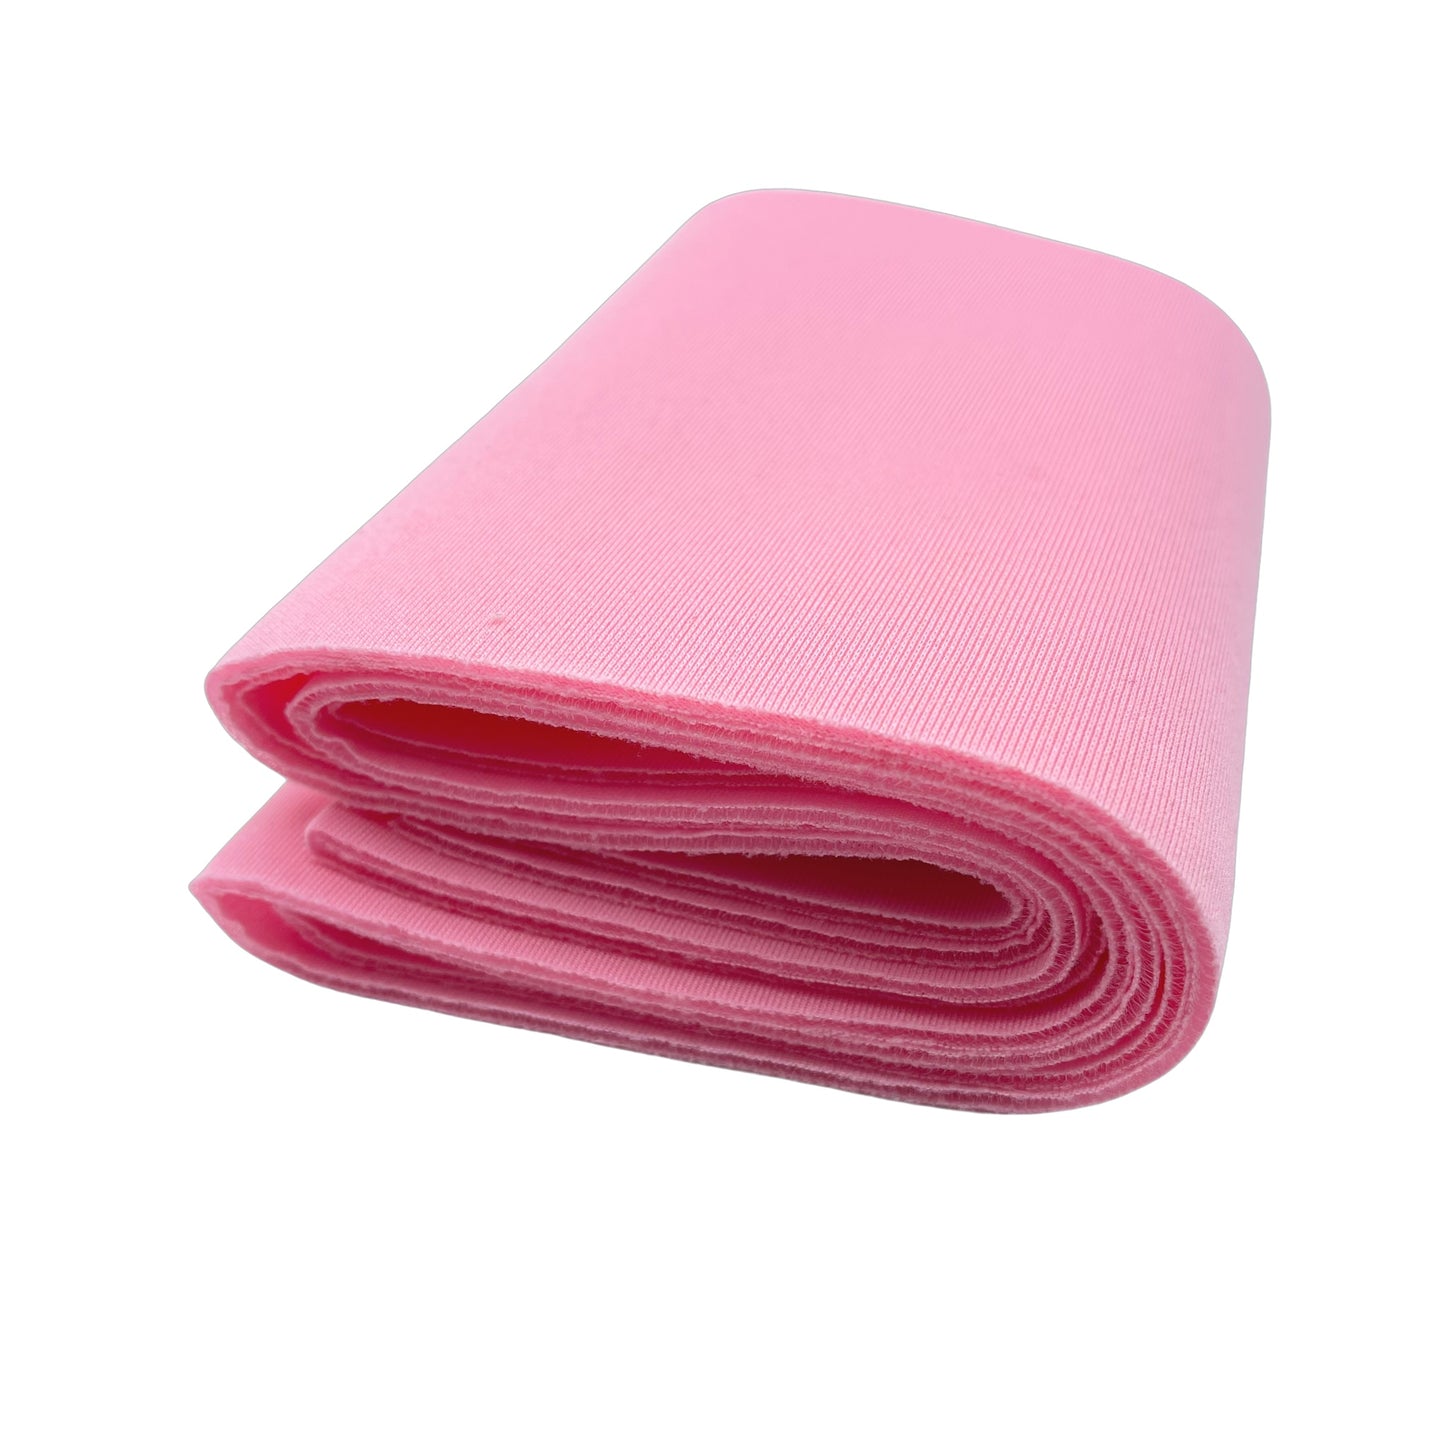 Light pink folded padded neoprene fabric strip.